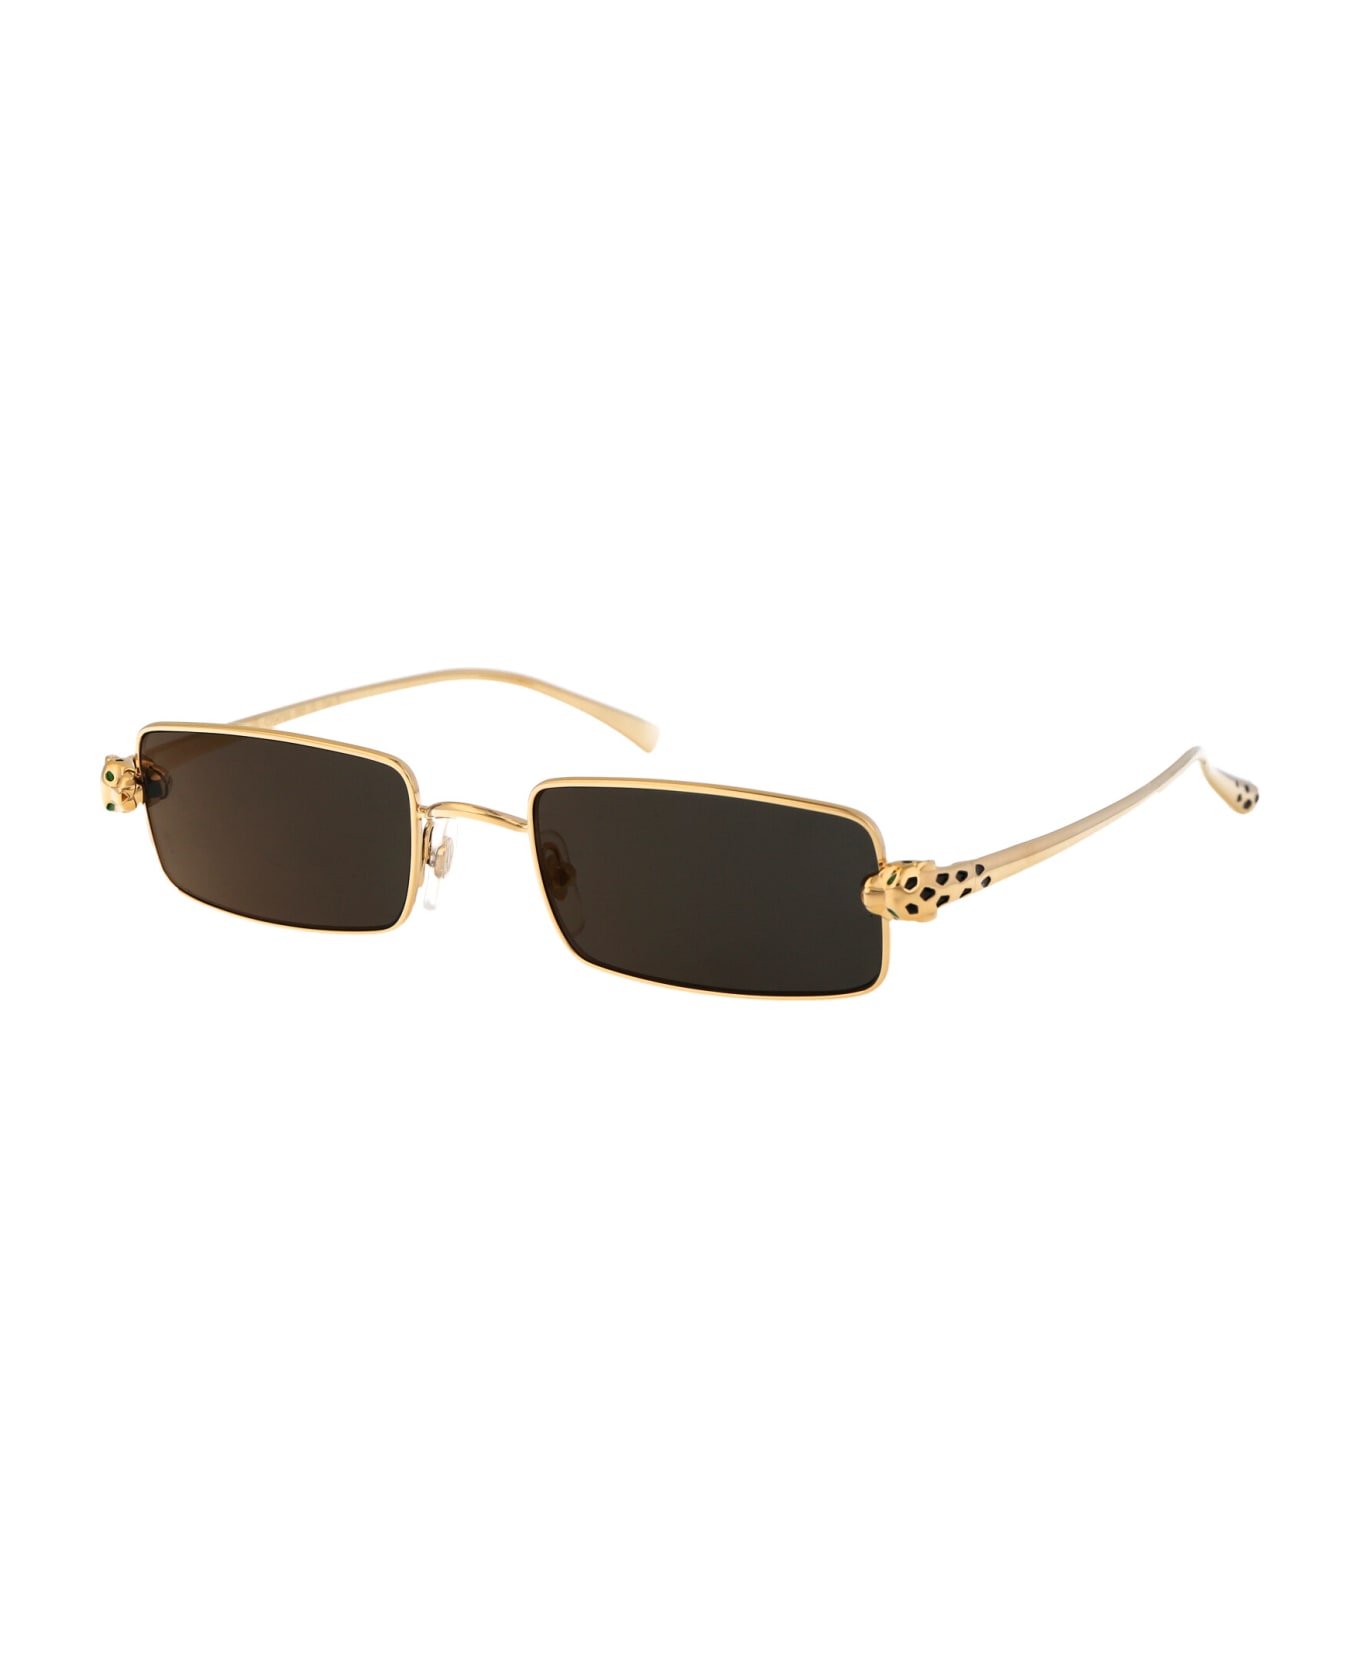 Cartier Eyewear Ct0473s Sunglasses - 001 GOLD GOLD GREY